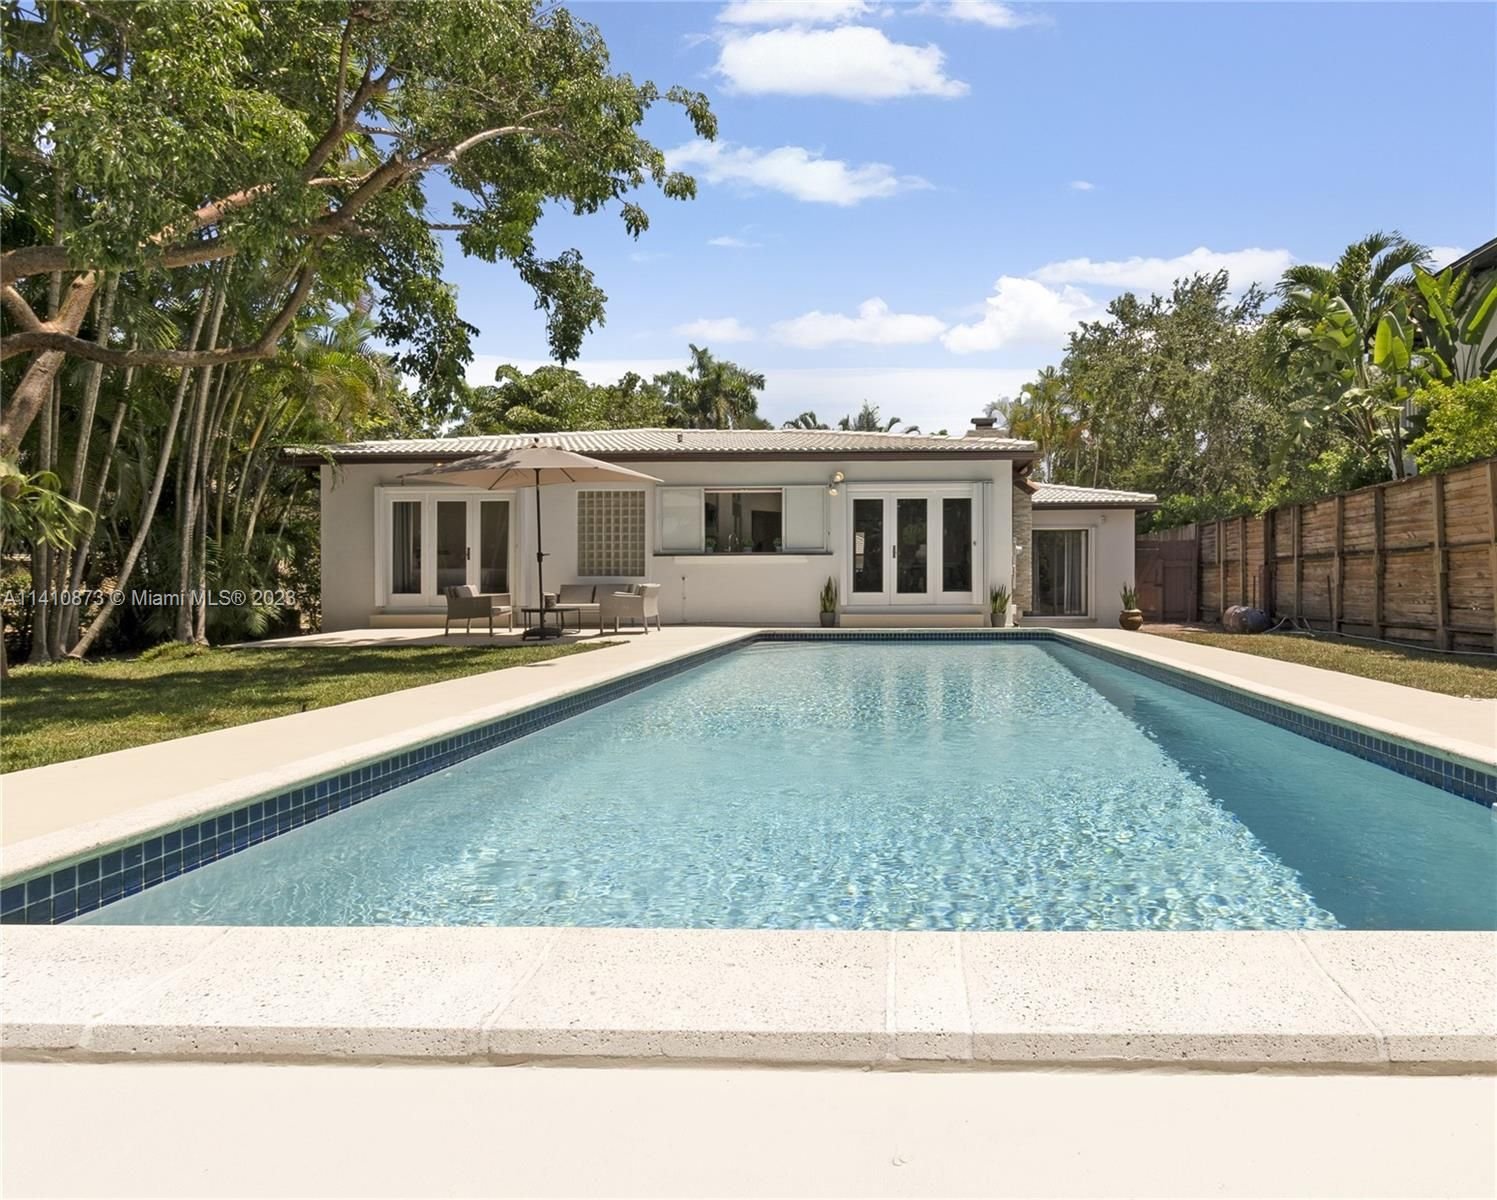 Real estate property located at 4121 Woodridge Rd, Miami-Dade County, Miami, FL